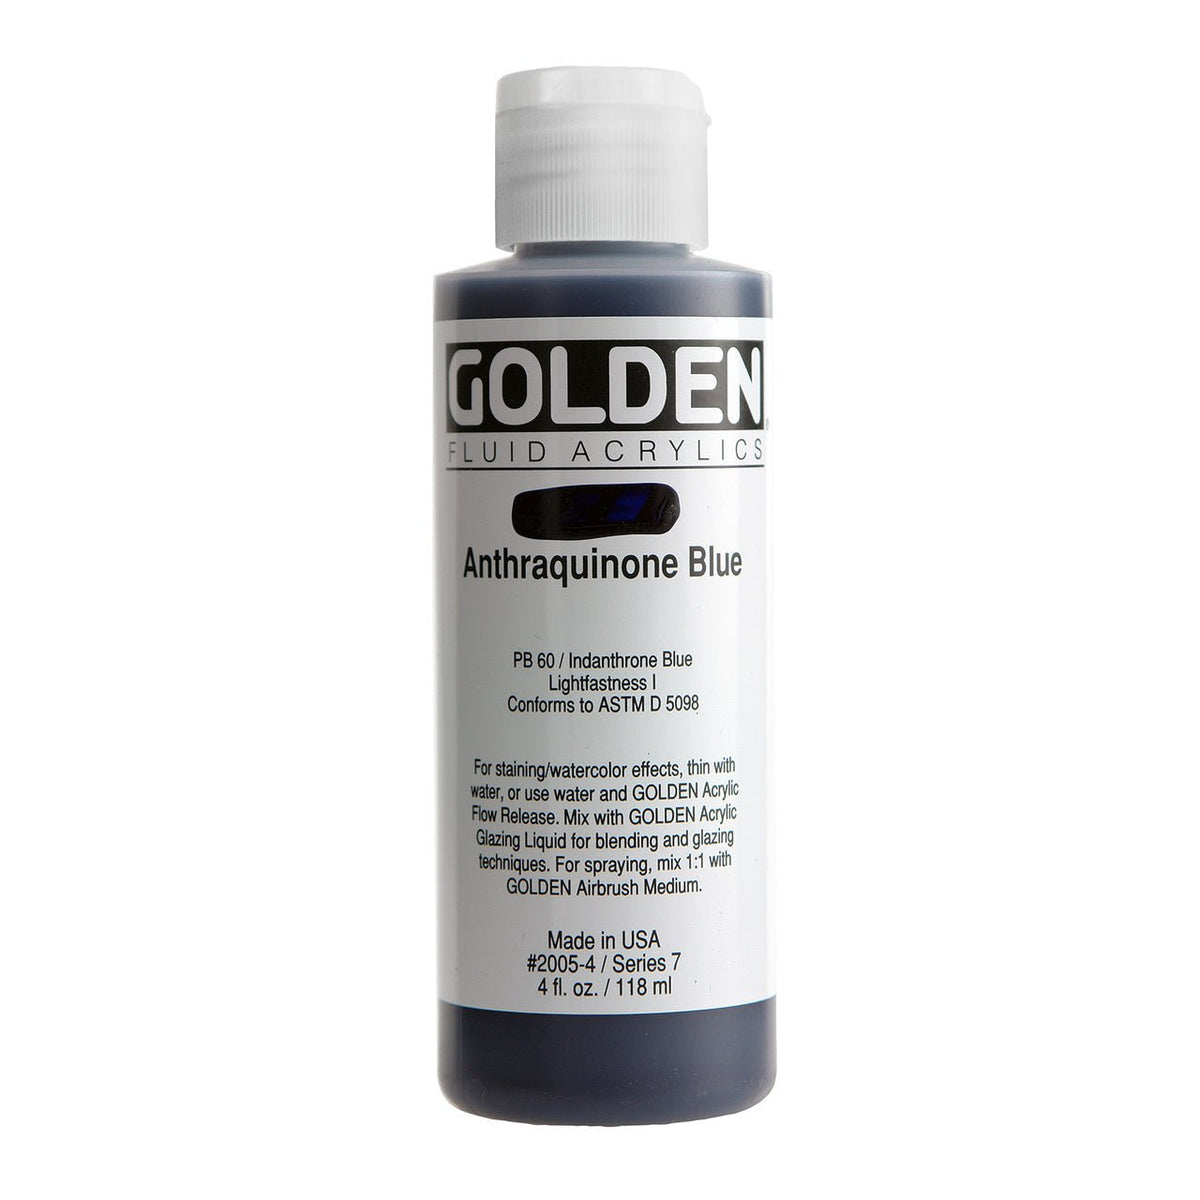 Golden Fluid Acrylic Anthraquinone Blue 4 oz - merriartist.com